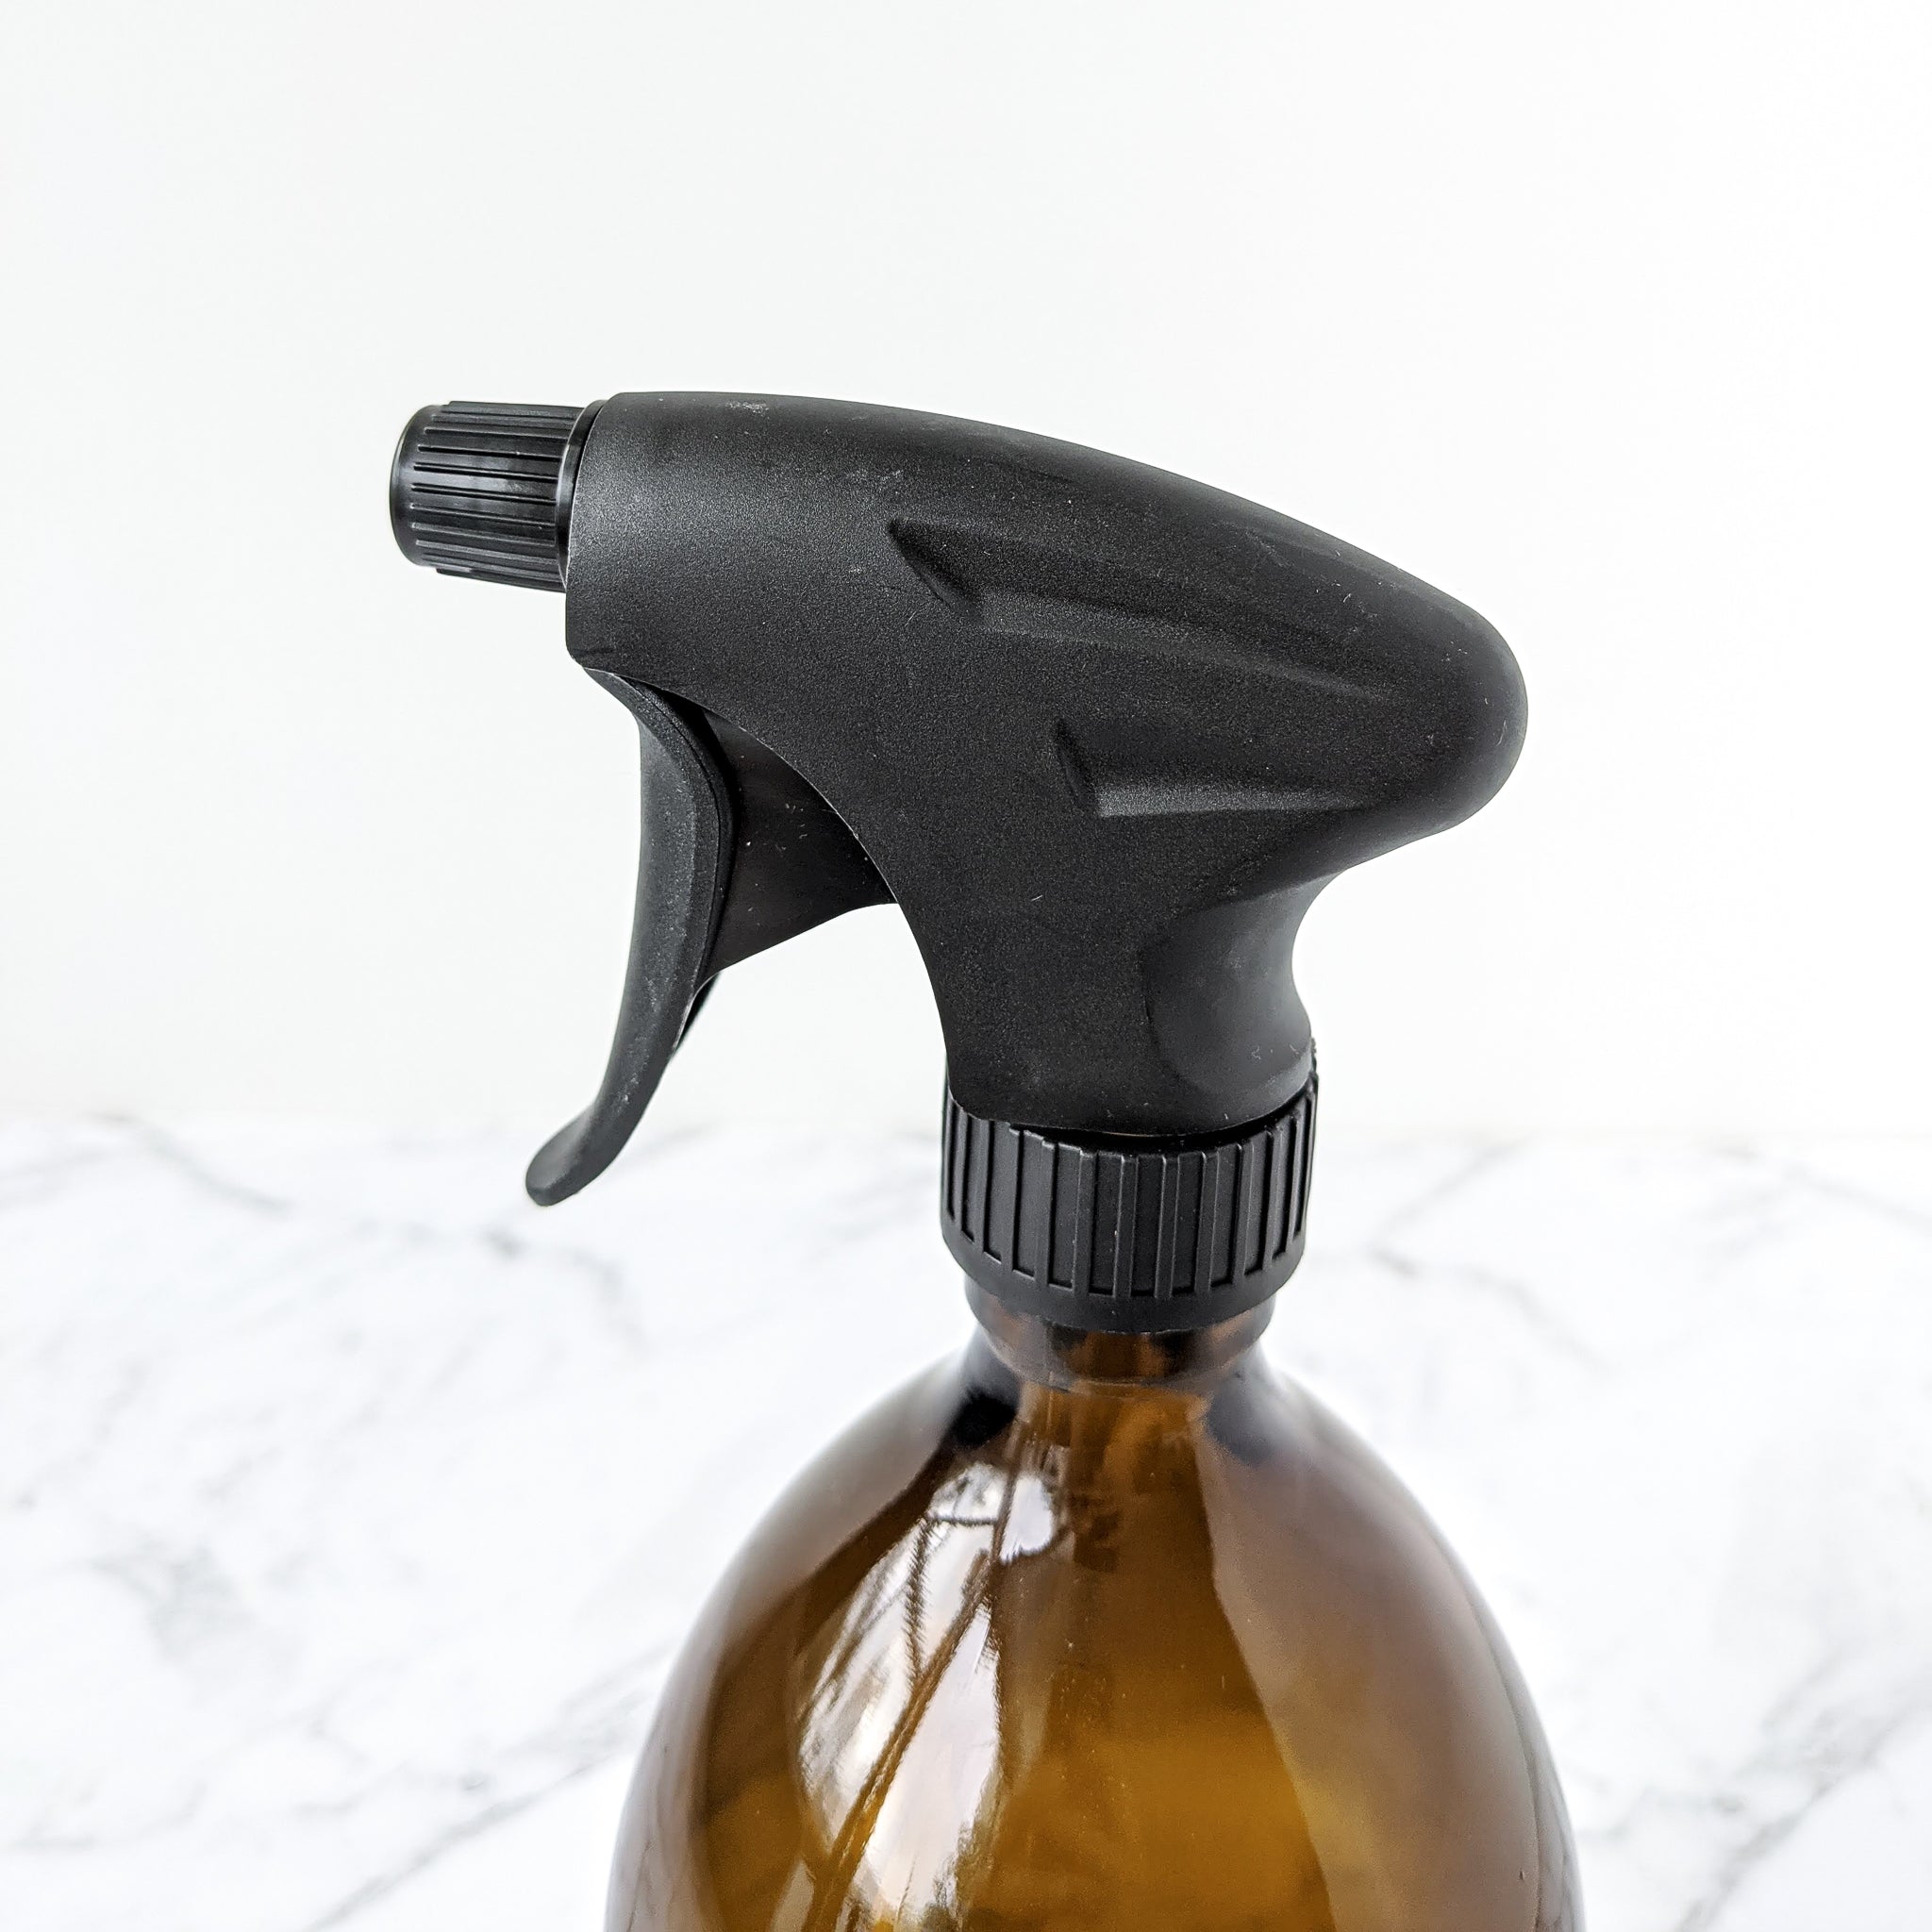 Amber Glass Bottle Black Trigger Spray 1L Refill Dispensary New Zealand The Eco Society